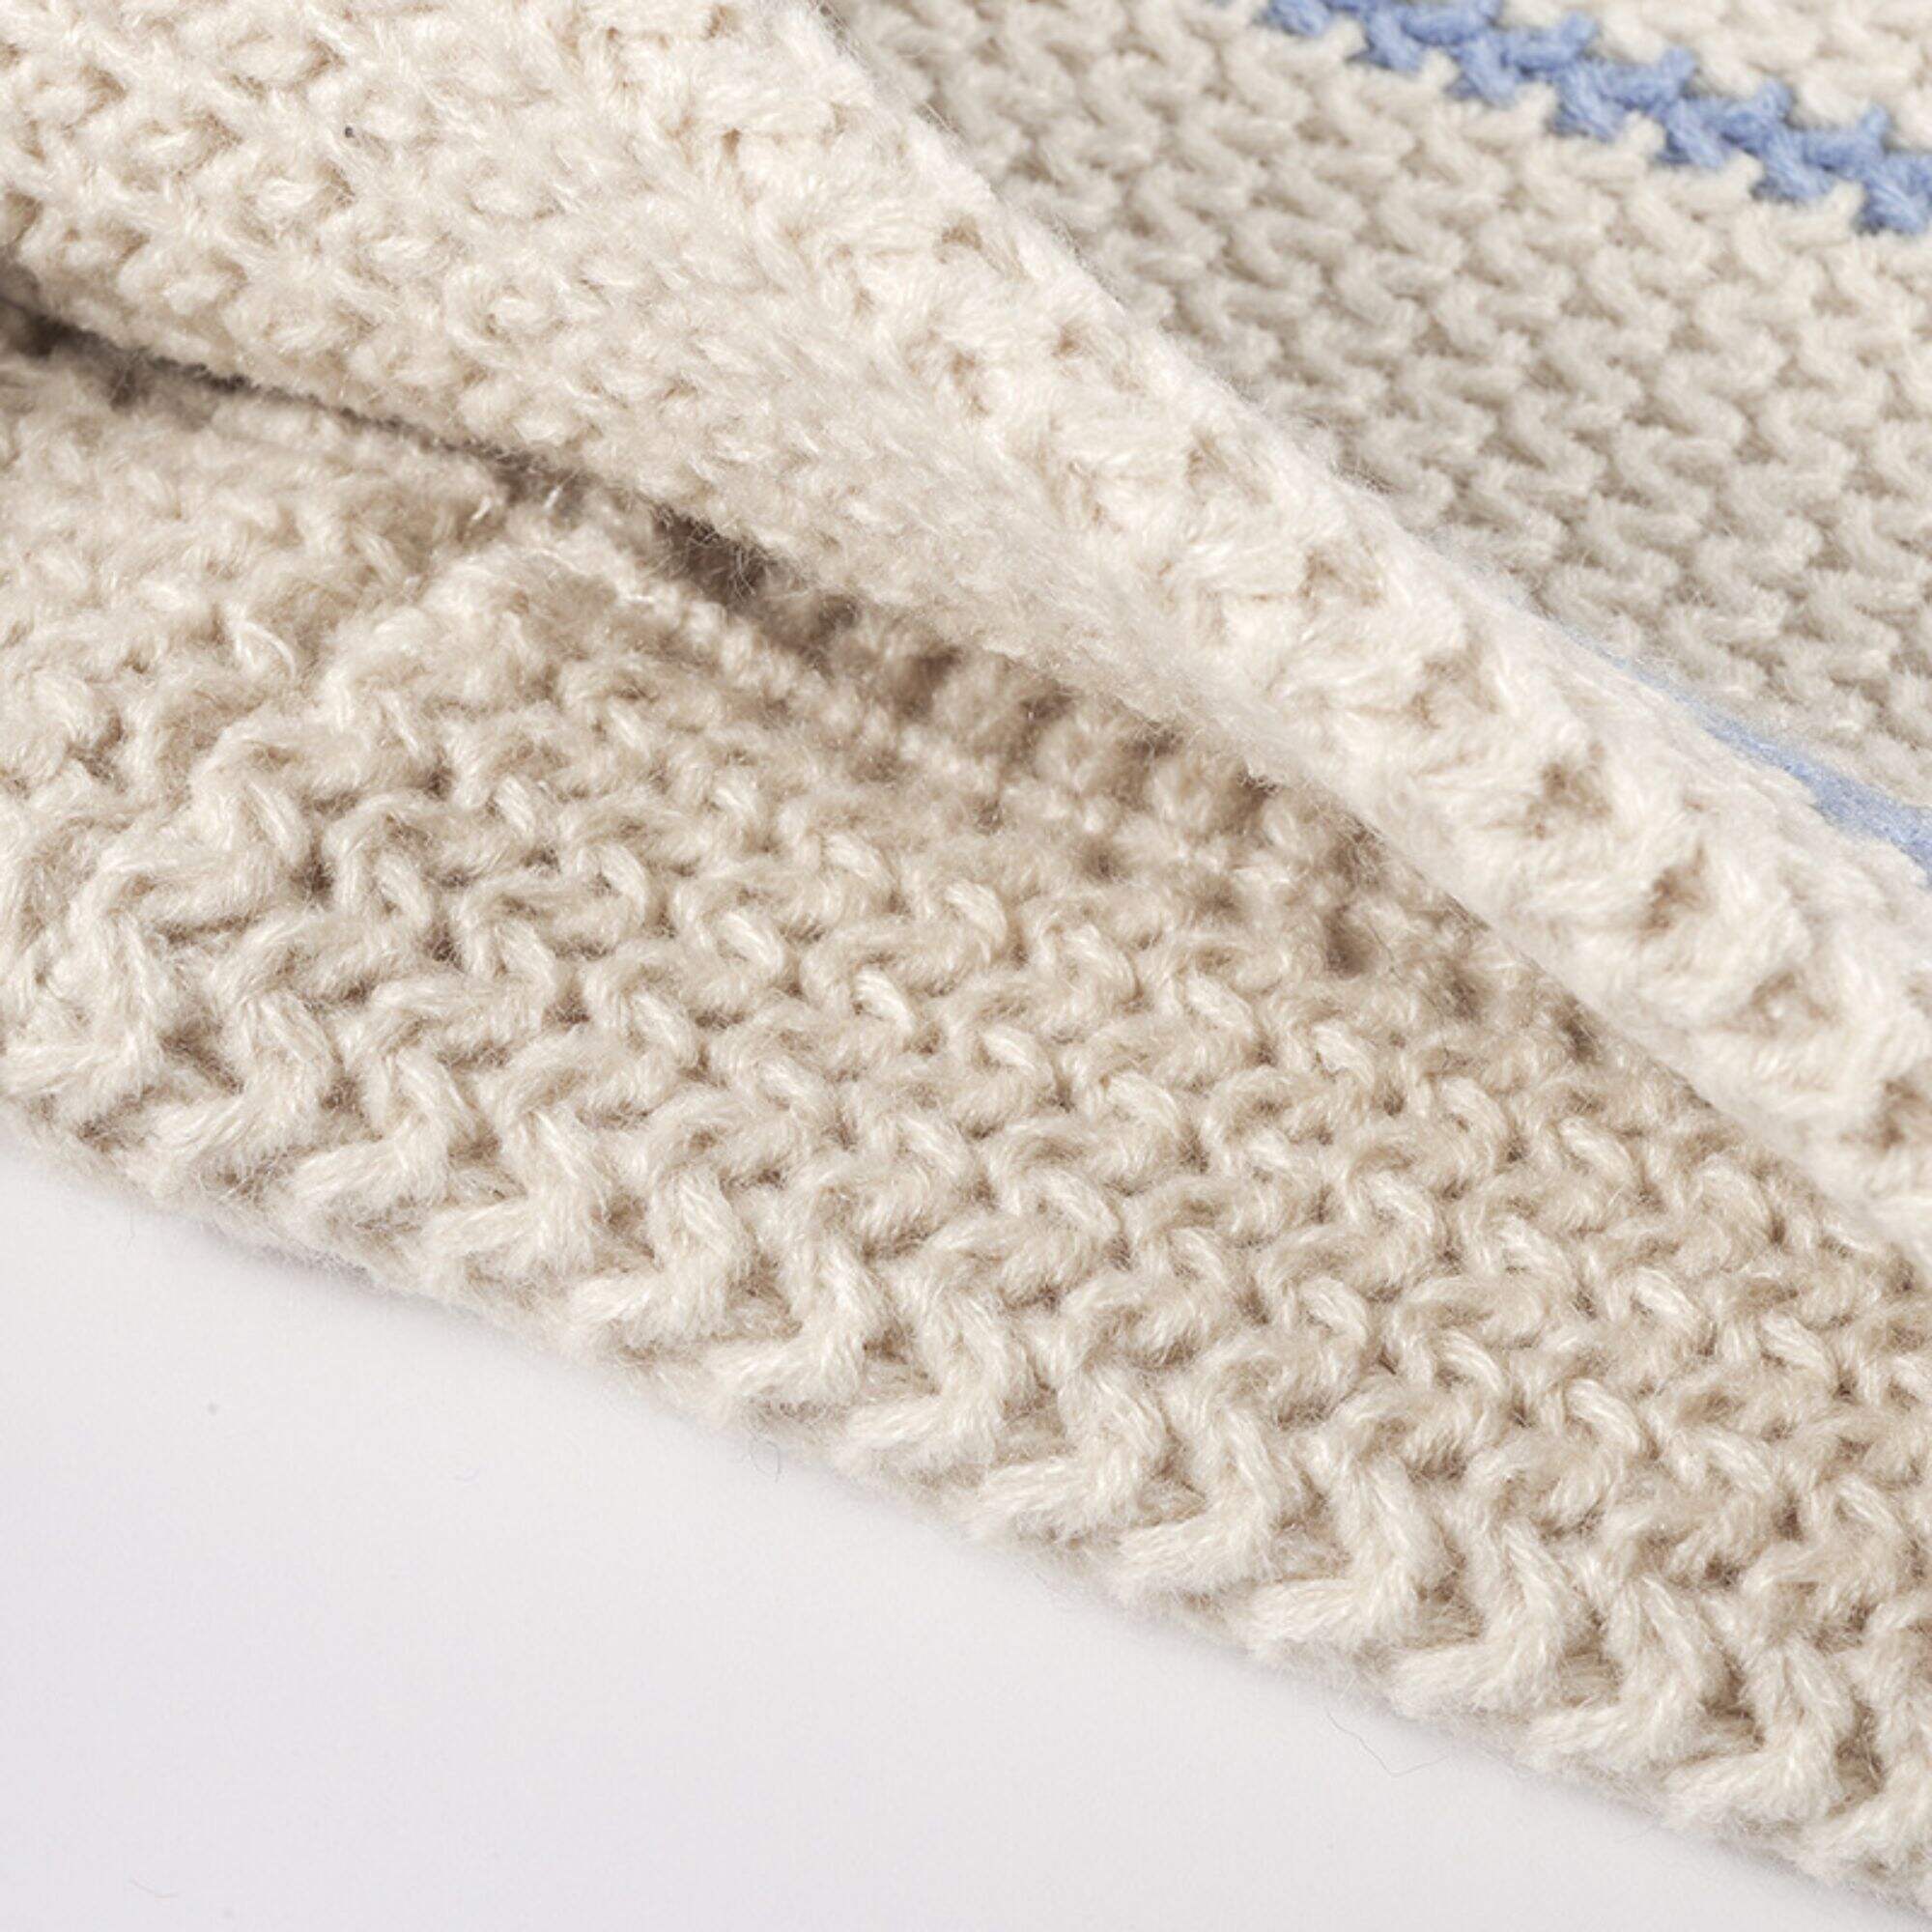 Stripe knitted beanie hat